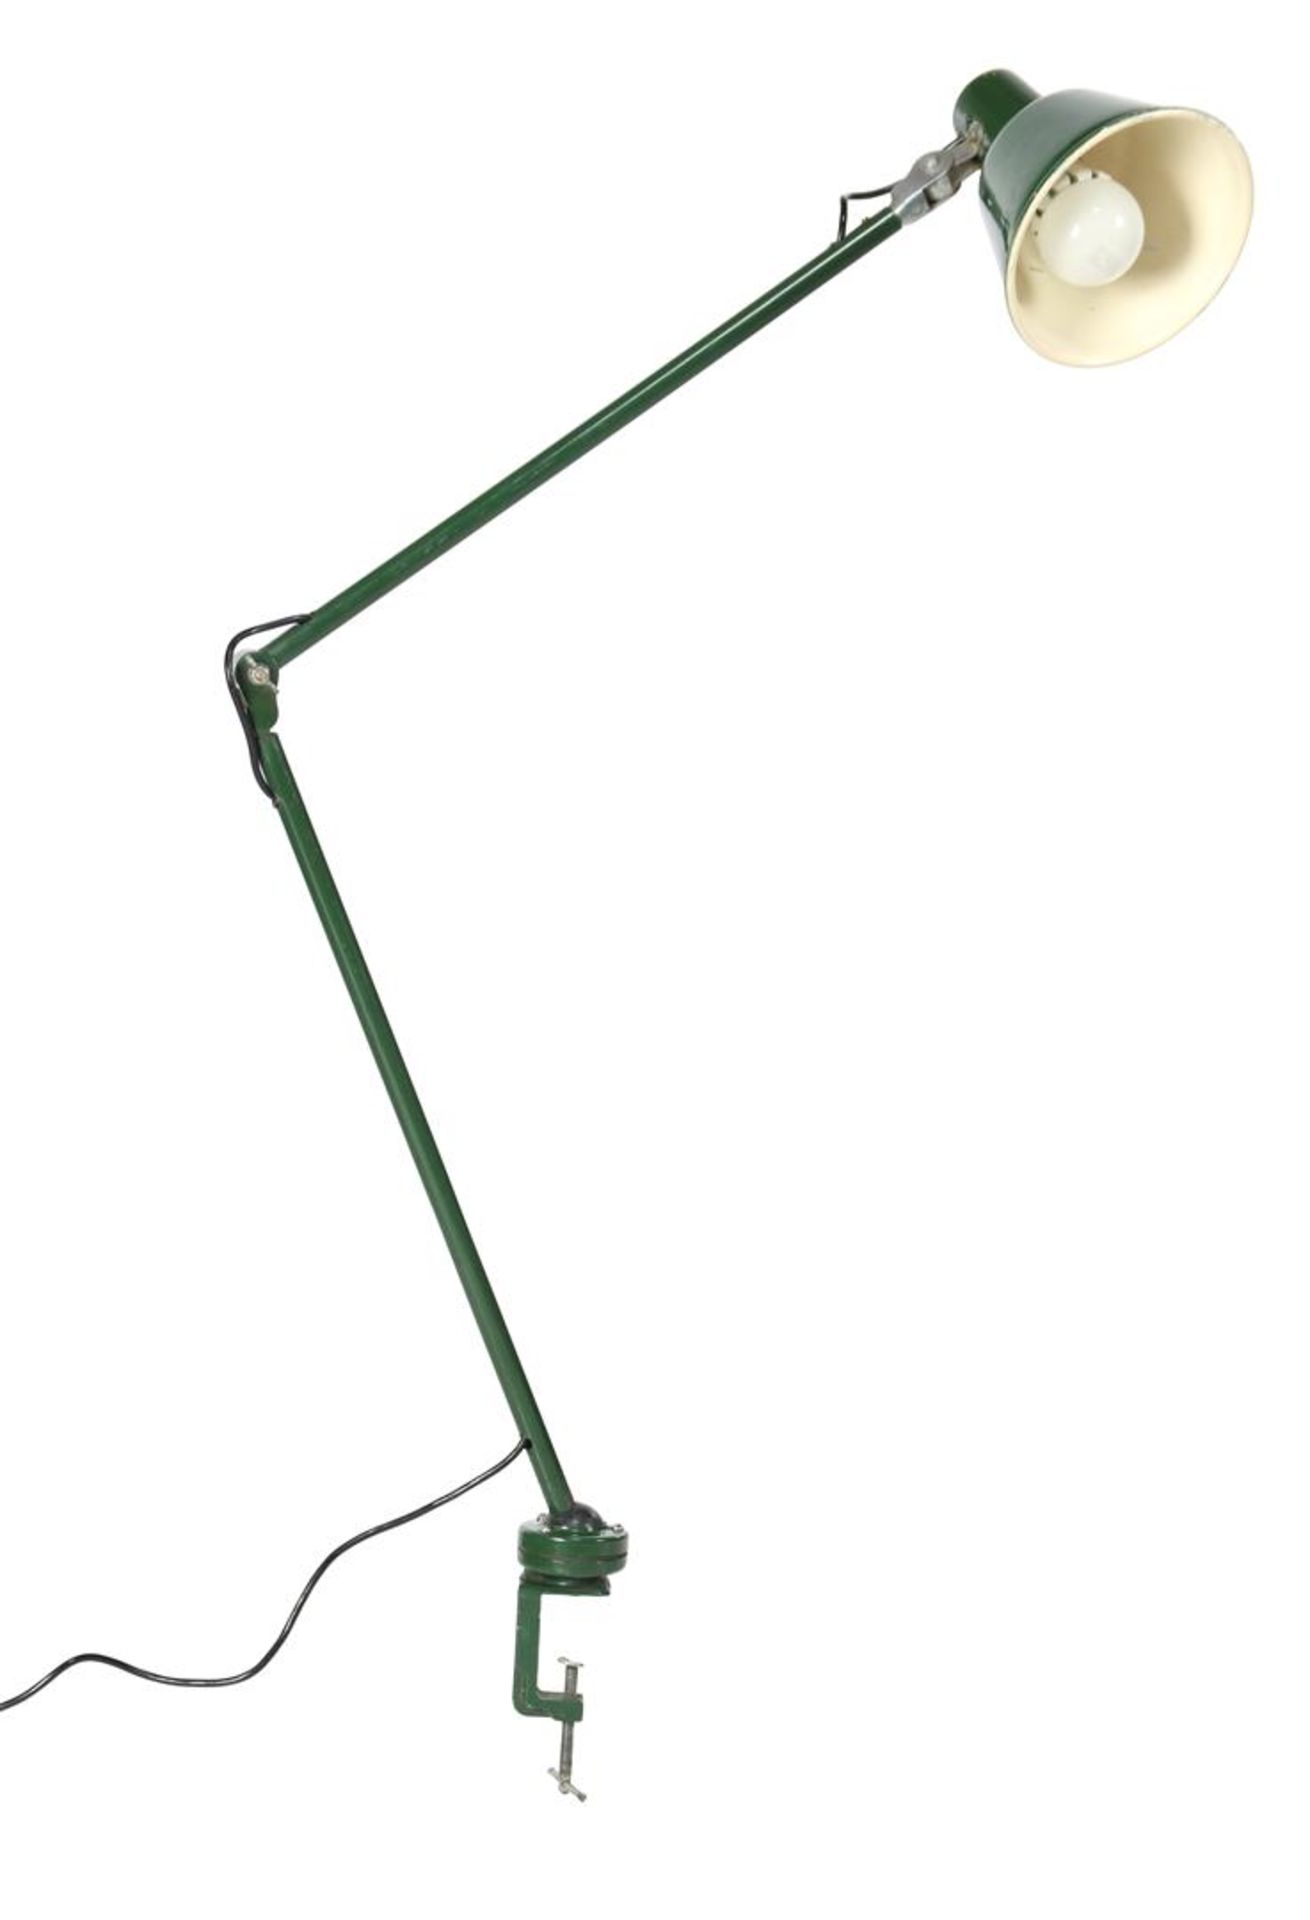 Adjustable metal clamp lamp